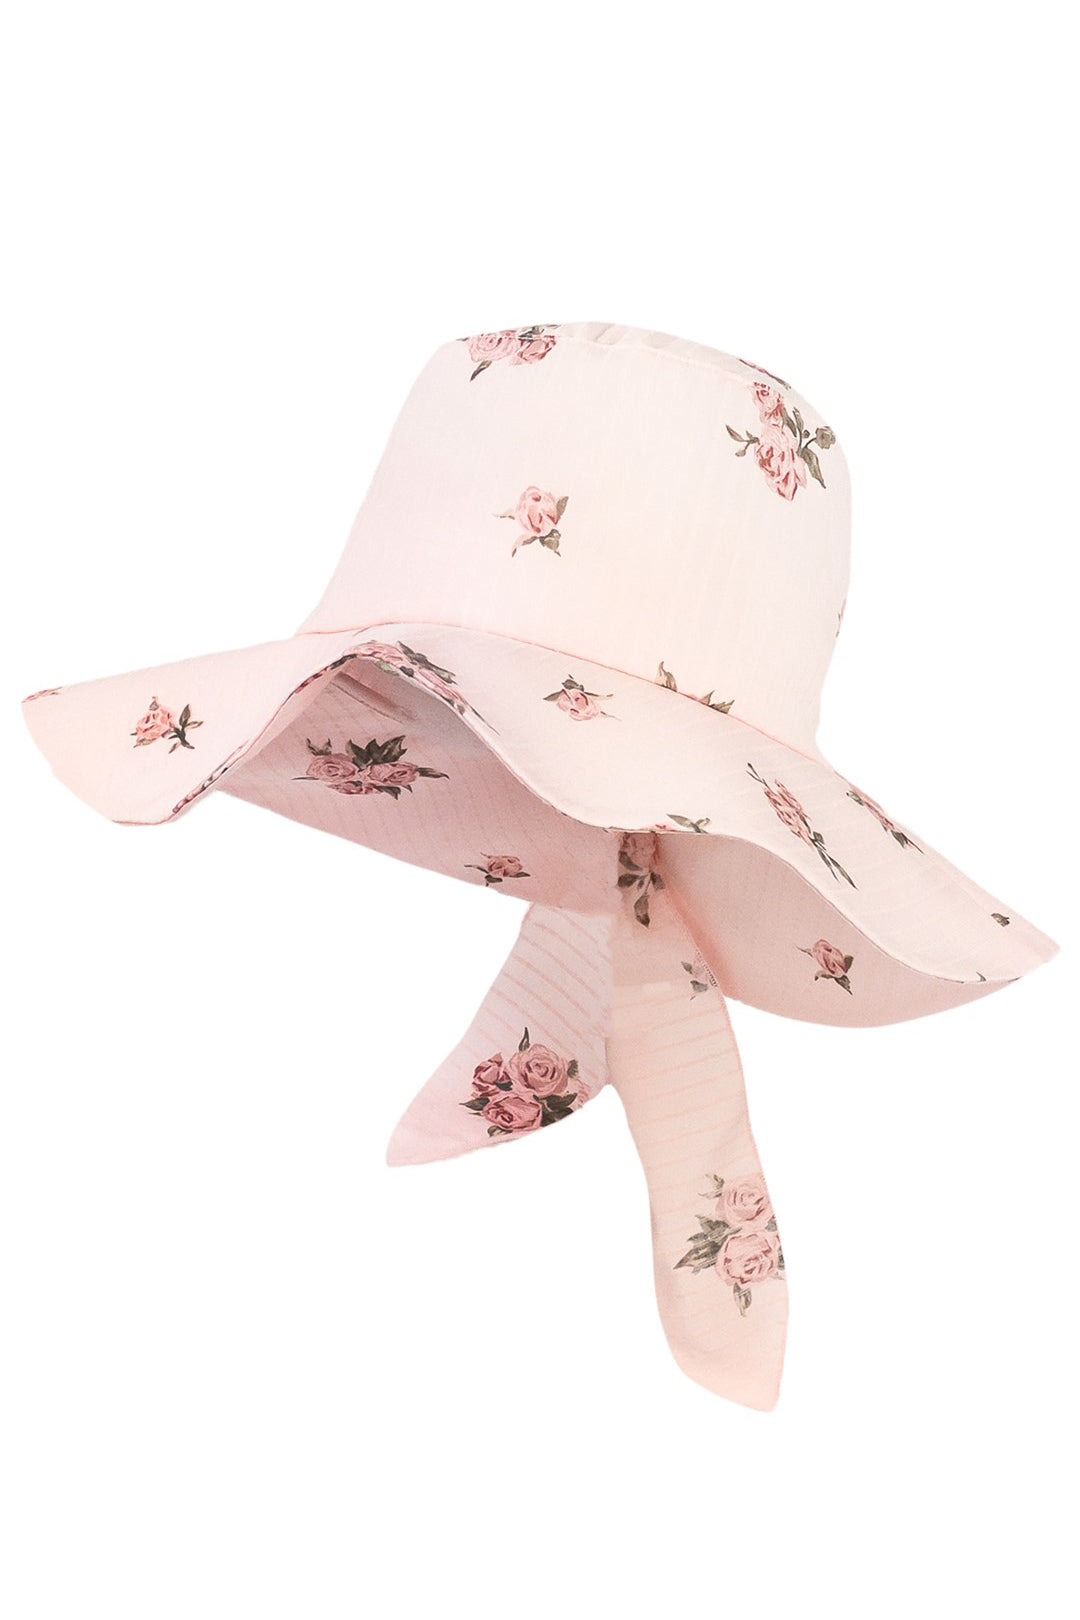 Jamiks "Pernille" Pink Vintage Floral Sun Hat | Millie and John